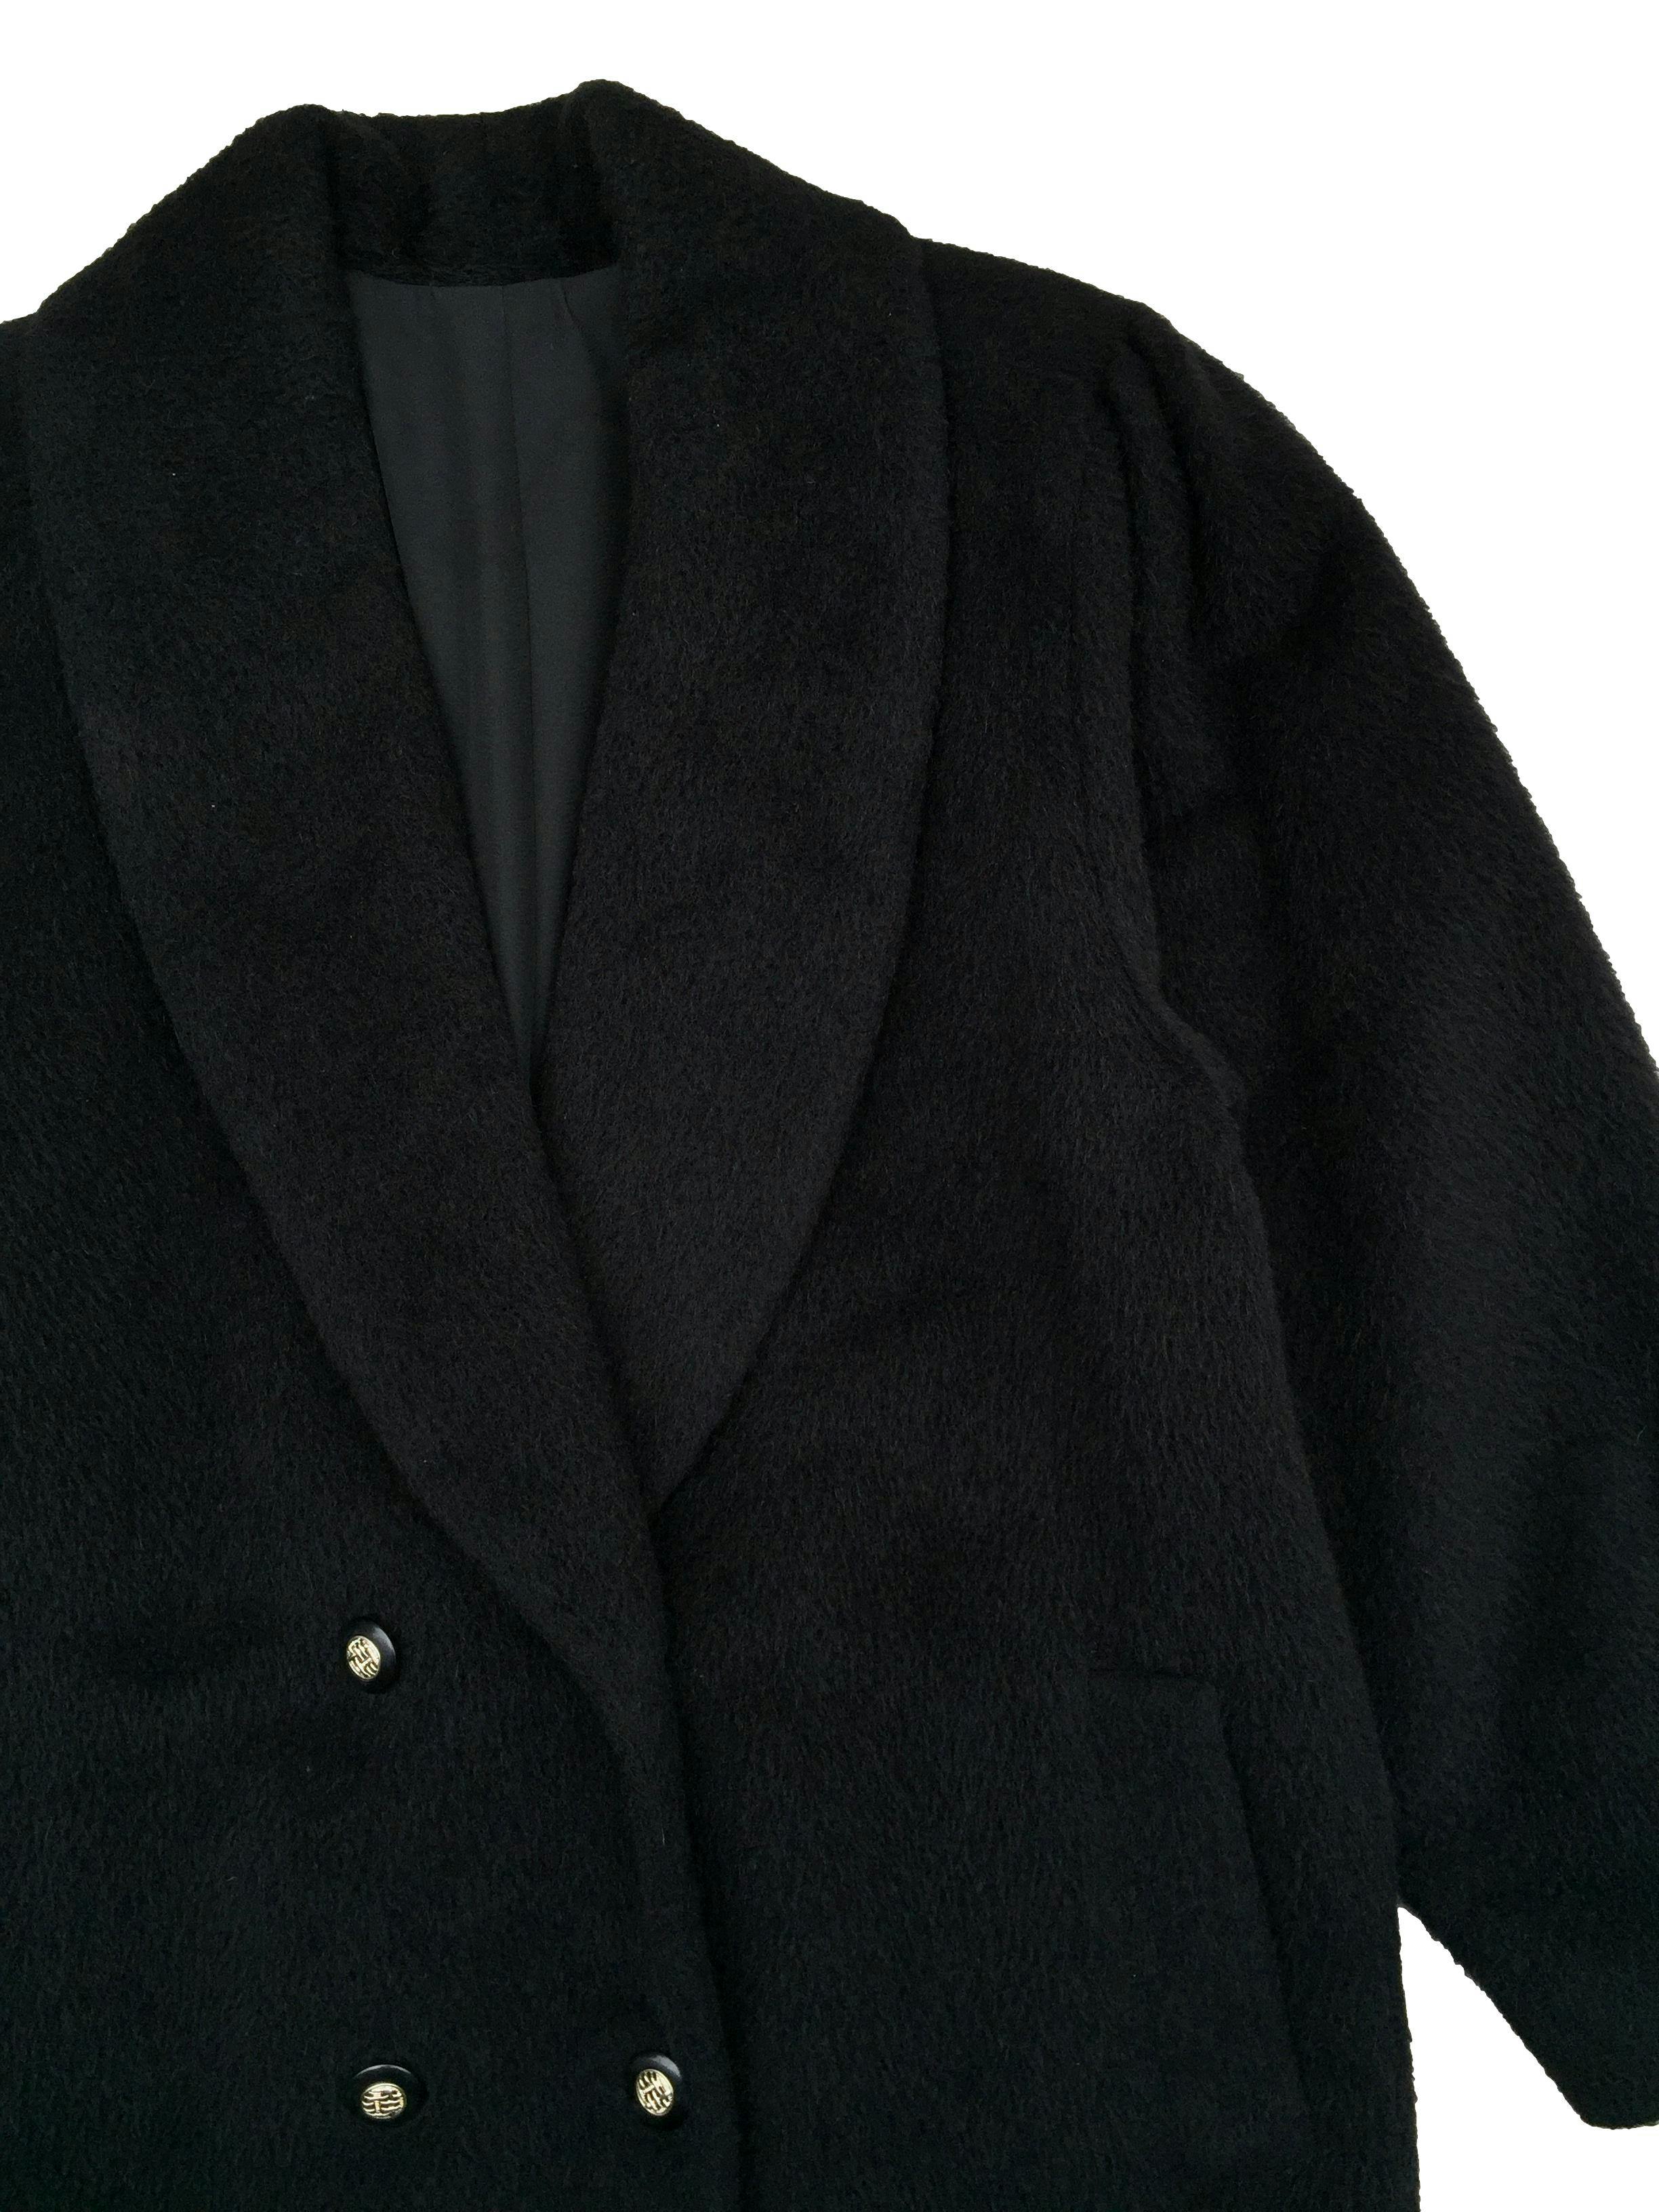 Abrigo negro 80% alpaca 30% lana, forrado, doble fila de botones y bolsillos. Busto 110cm Largo 85cm